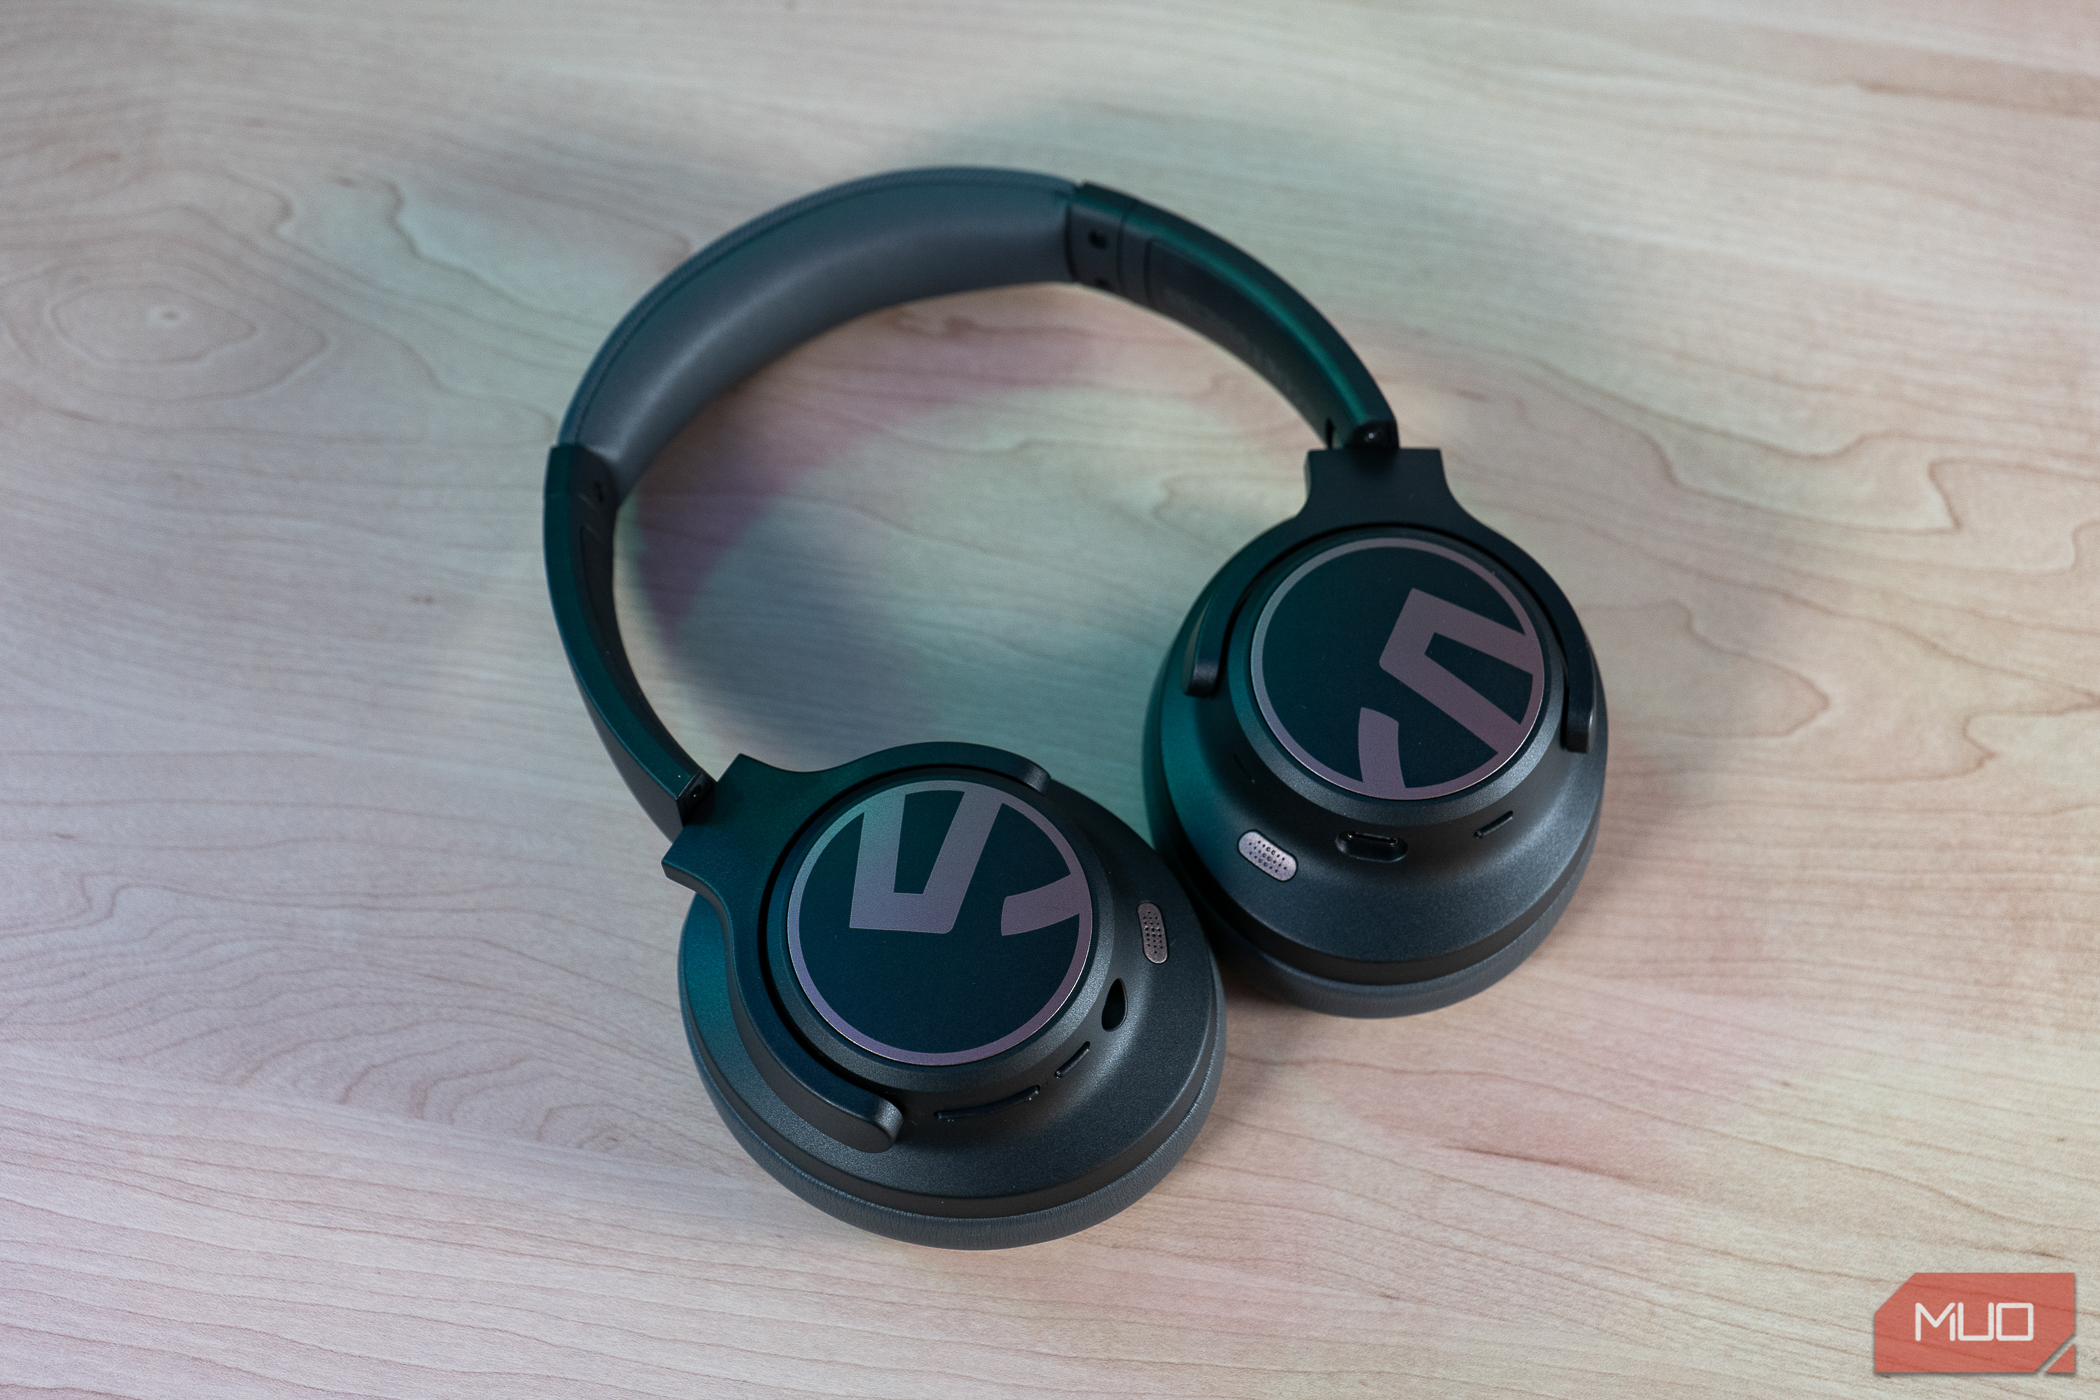 SoundPEATS Space headphones displaying logo on the earcups